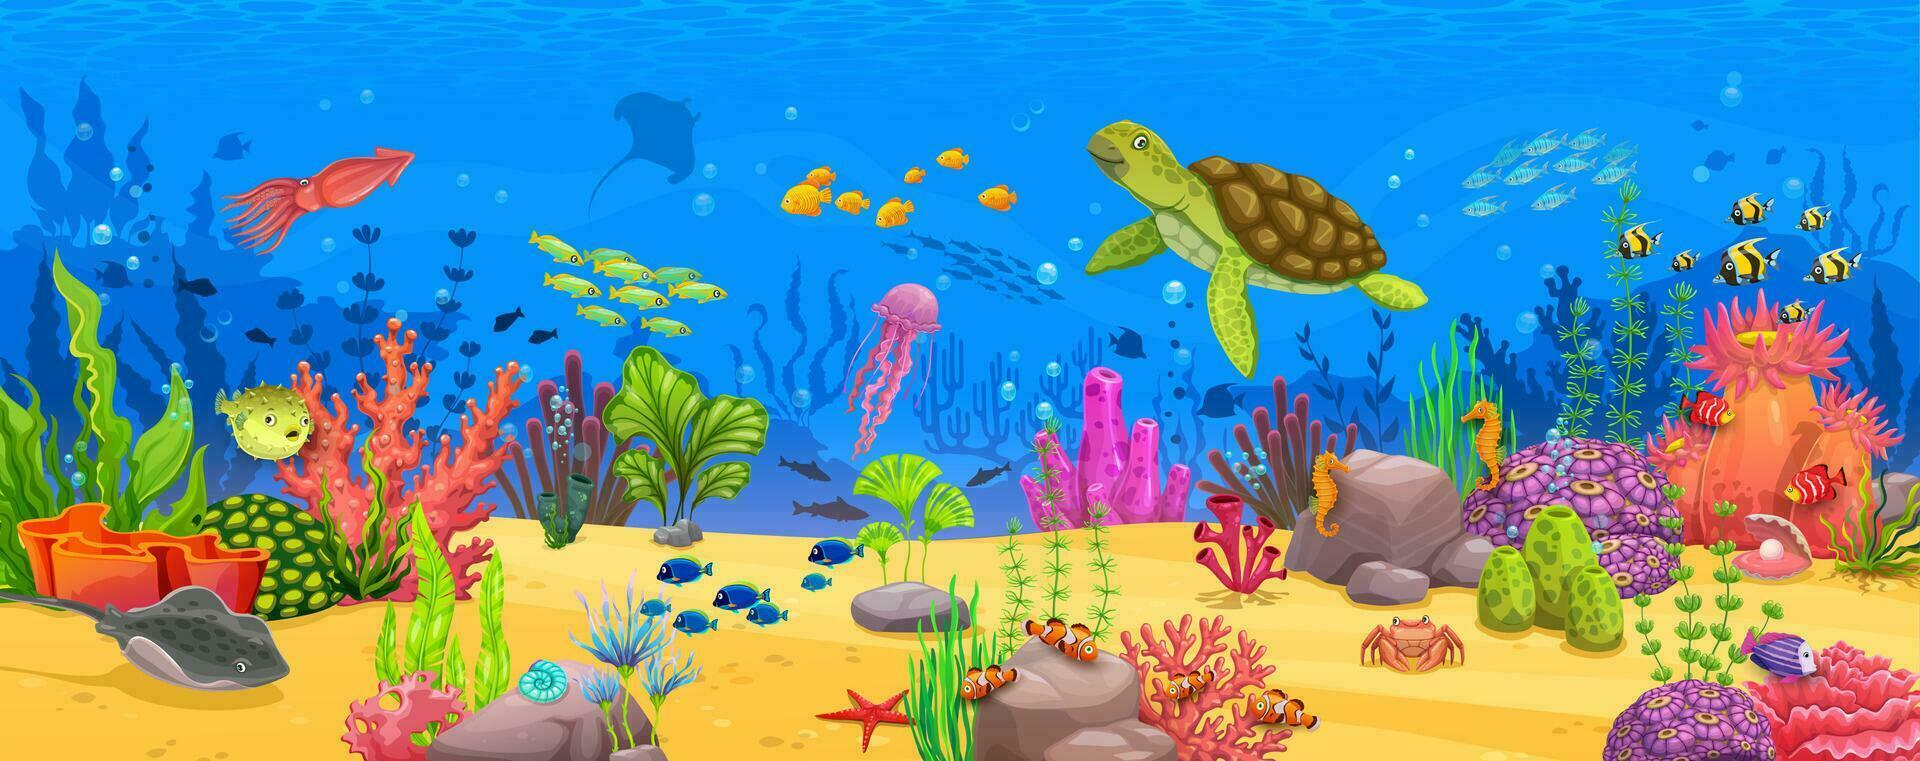 dibujos animados submarino paisaje con tortuga, peces vector